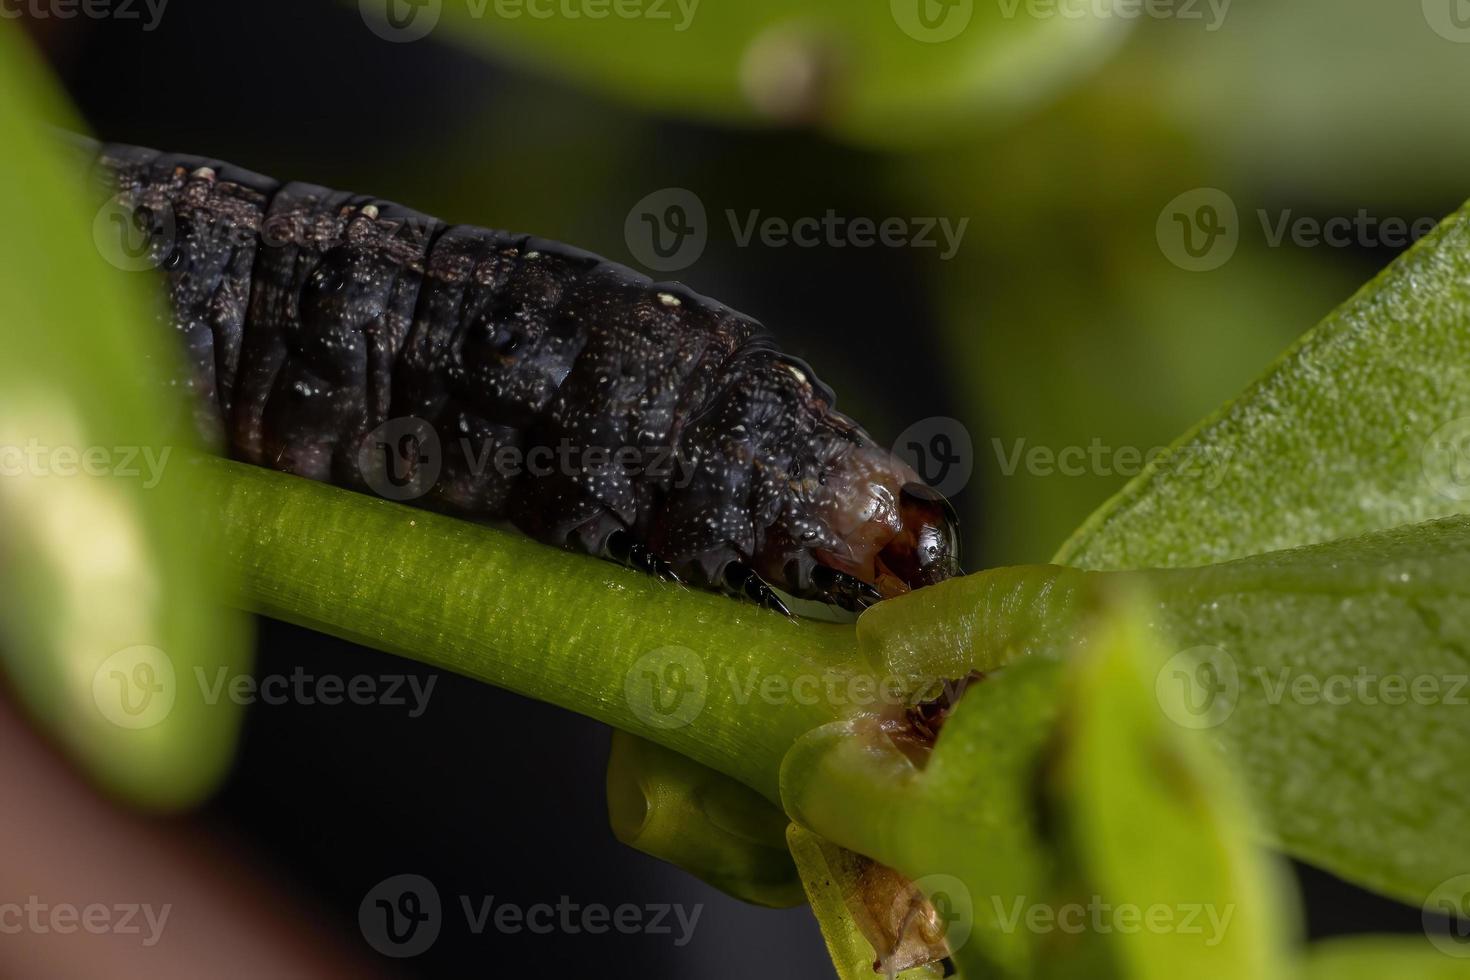 Caterpillar eating the Common Purslane plant photo